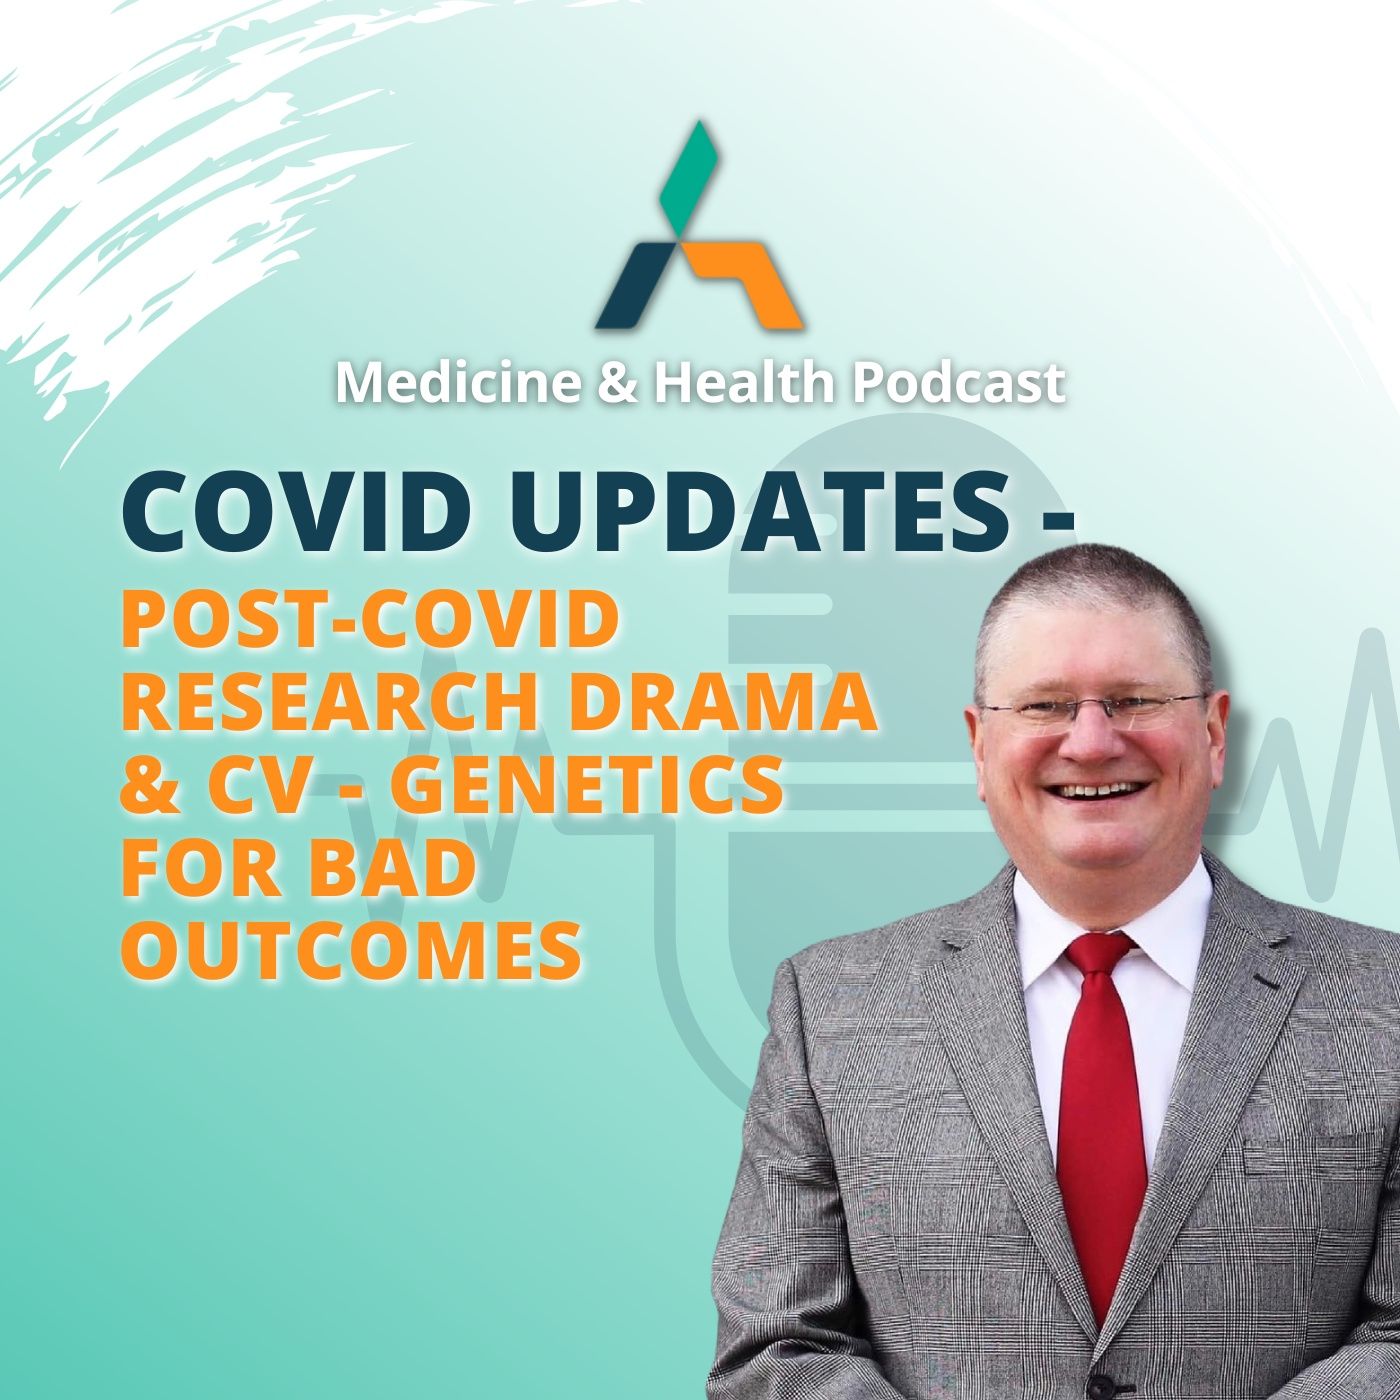 COVID UPDATES - Post-COVID Research Drama & CV- Genetics for Bad Outcomes